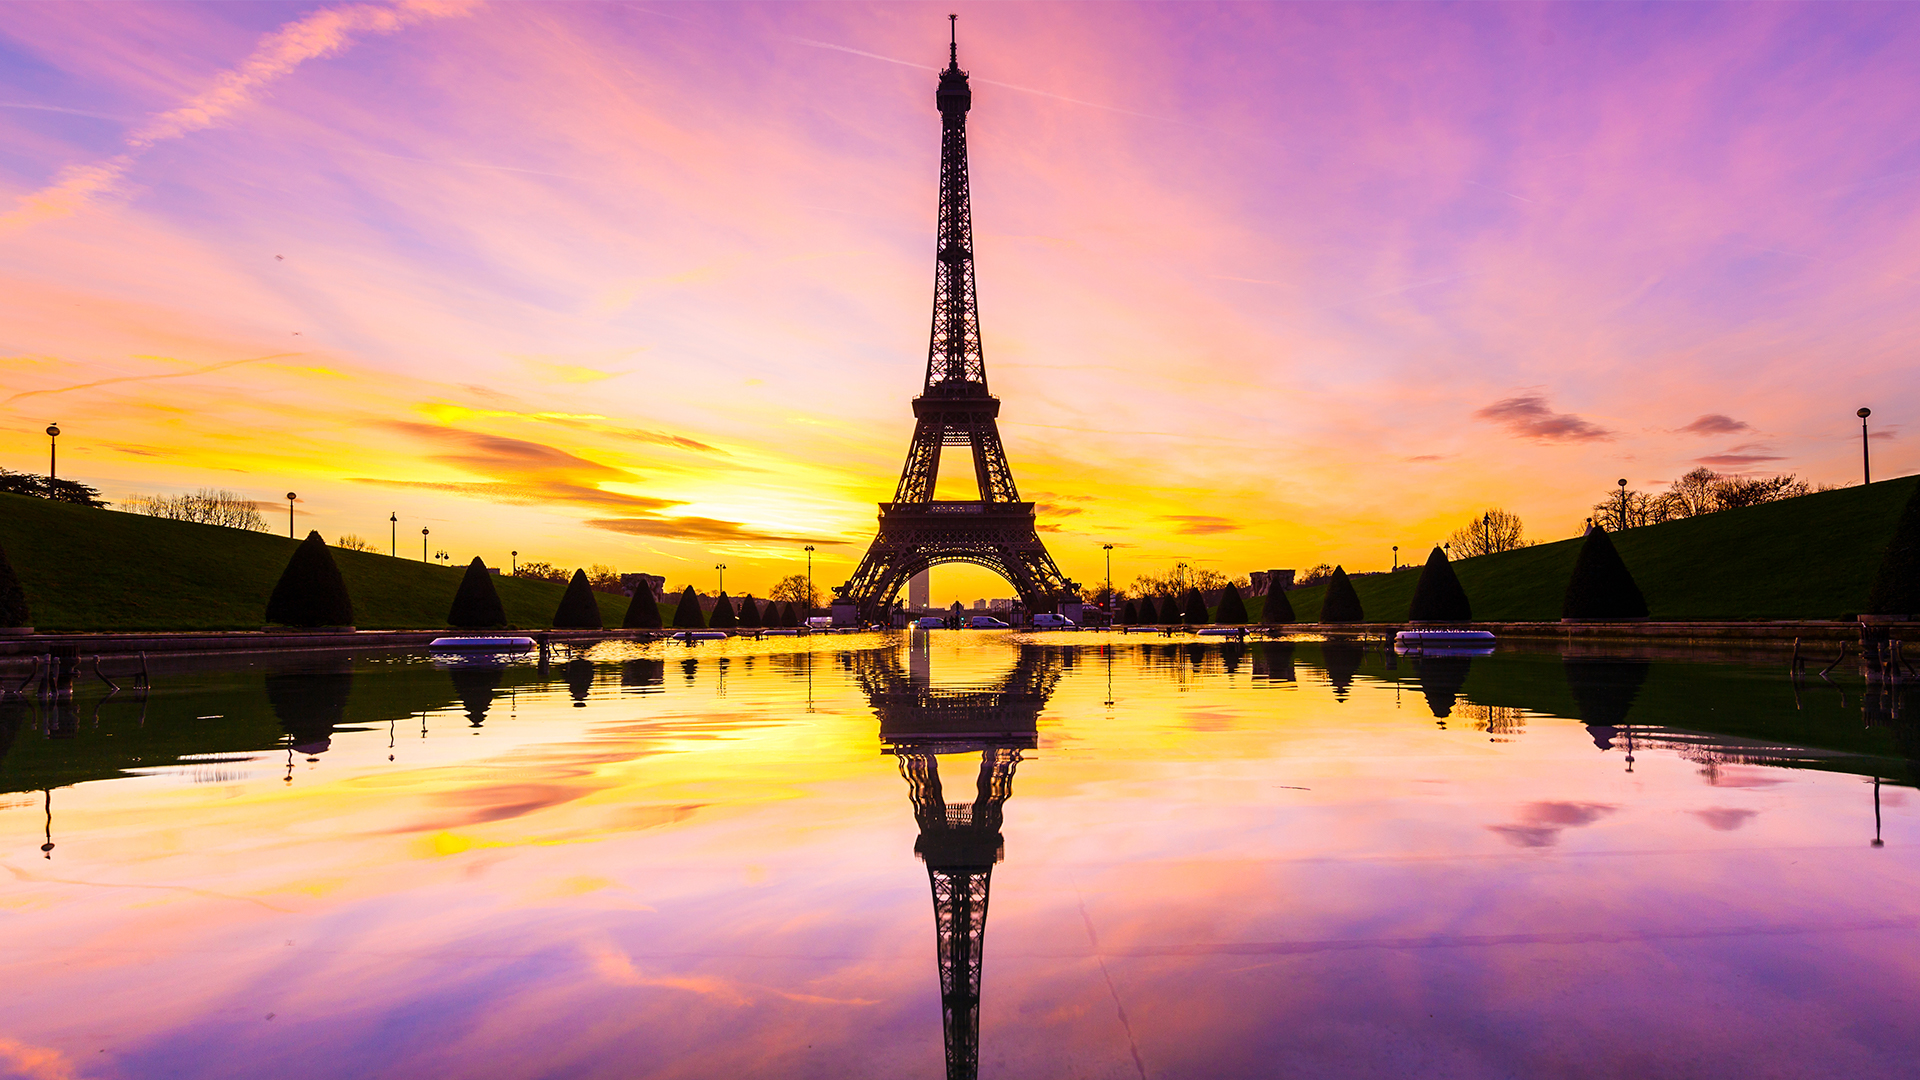 Eiffel Tower sunset wallpaper - Themes10.win